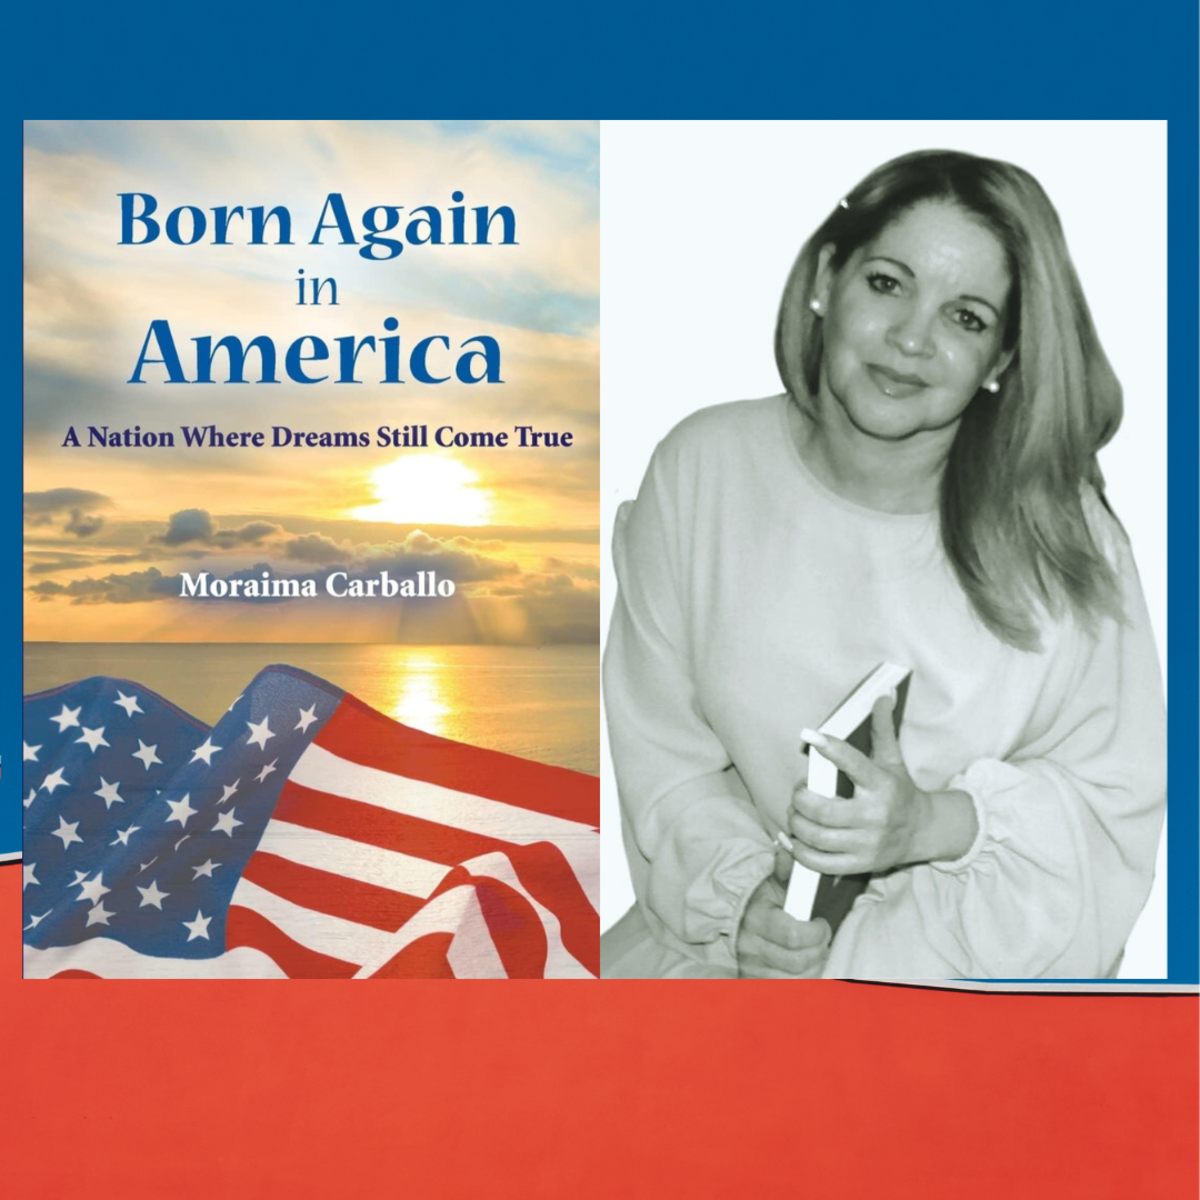 Interview With Author Moraima Carballo